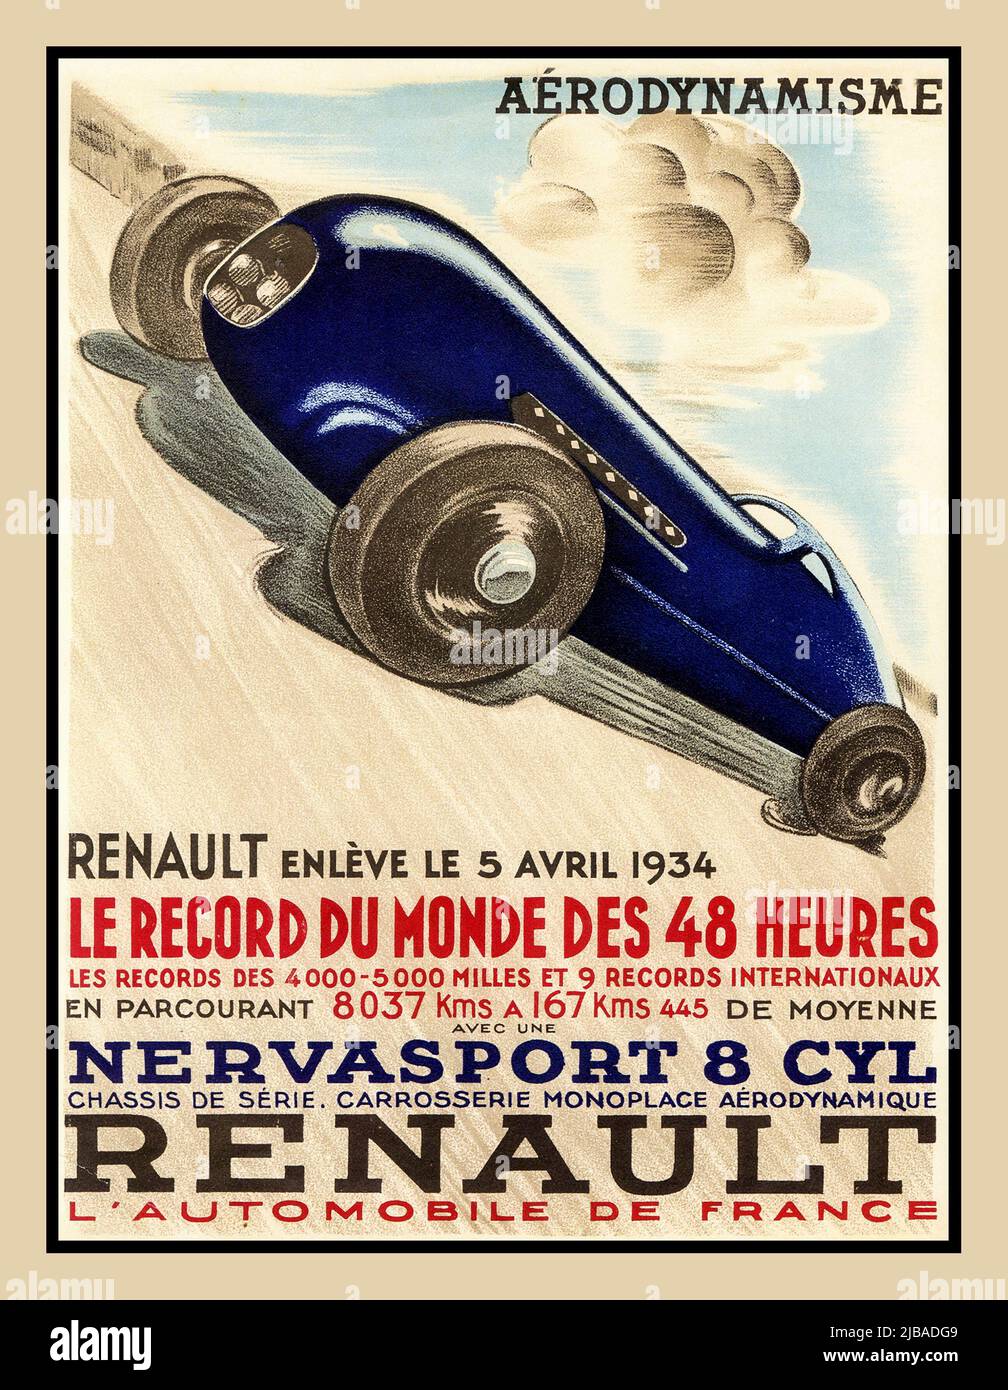 1934 Renault Vintage Motor Racing Sport Poster Le Record de Monde des 48 Heures Stock Photo